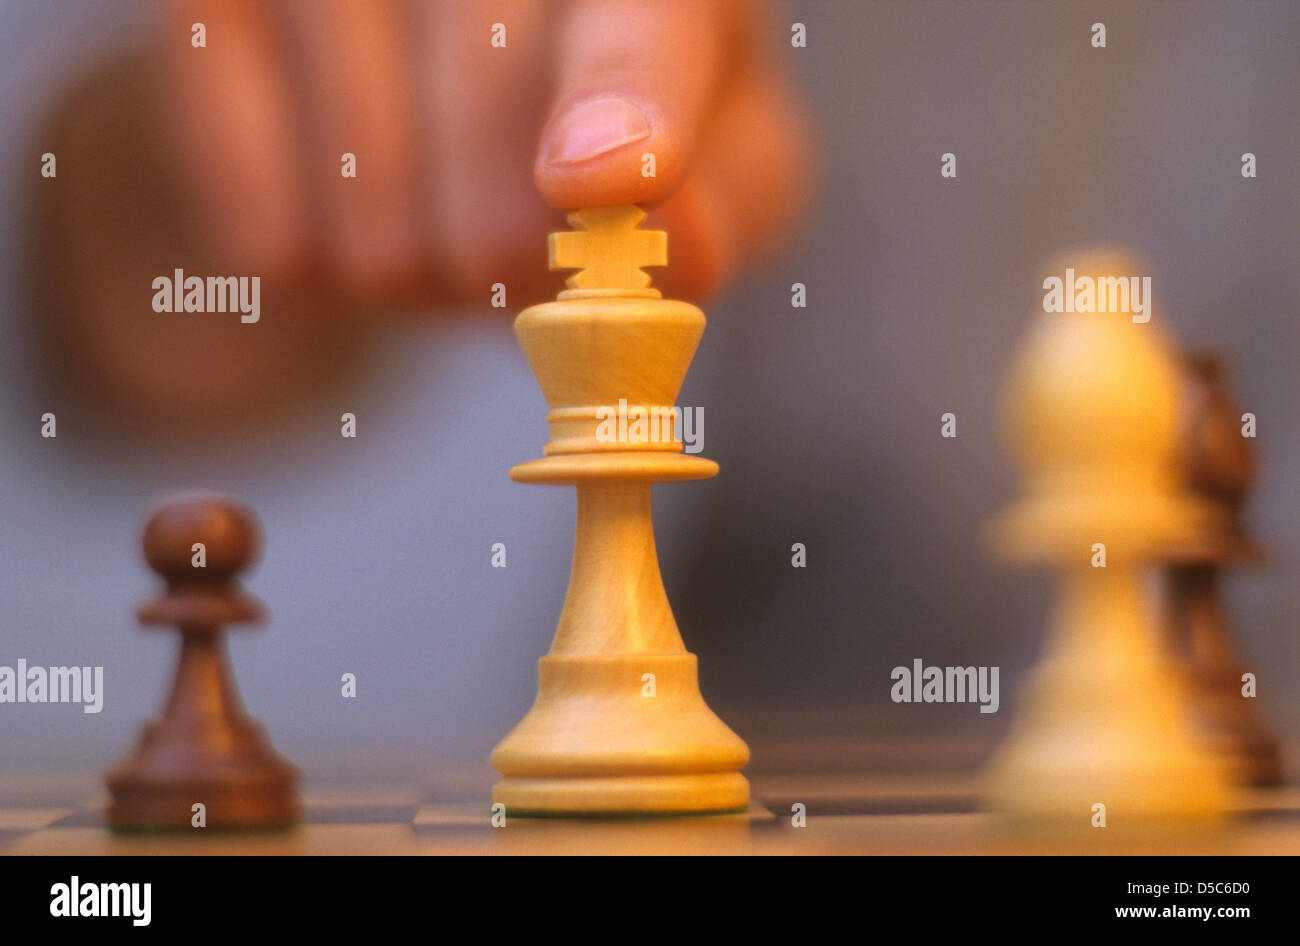 Hand Man Taking Chess Piece Make Next Move Chess Game Stock Photo by  ©guruxox 640426490